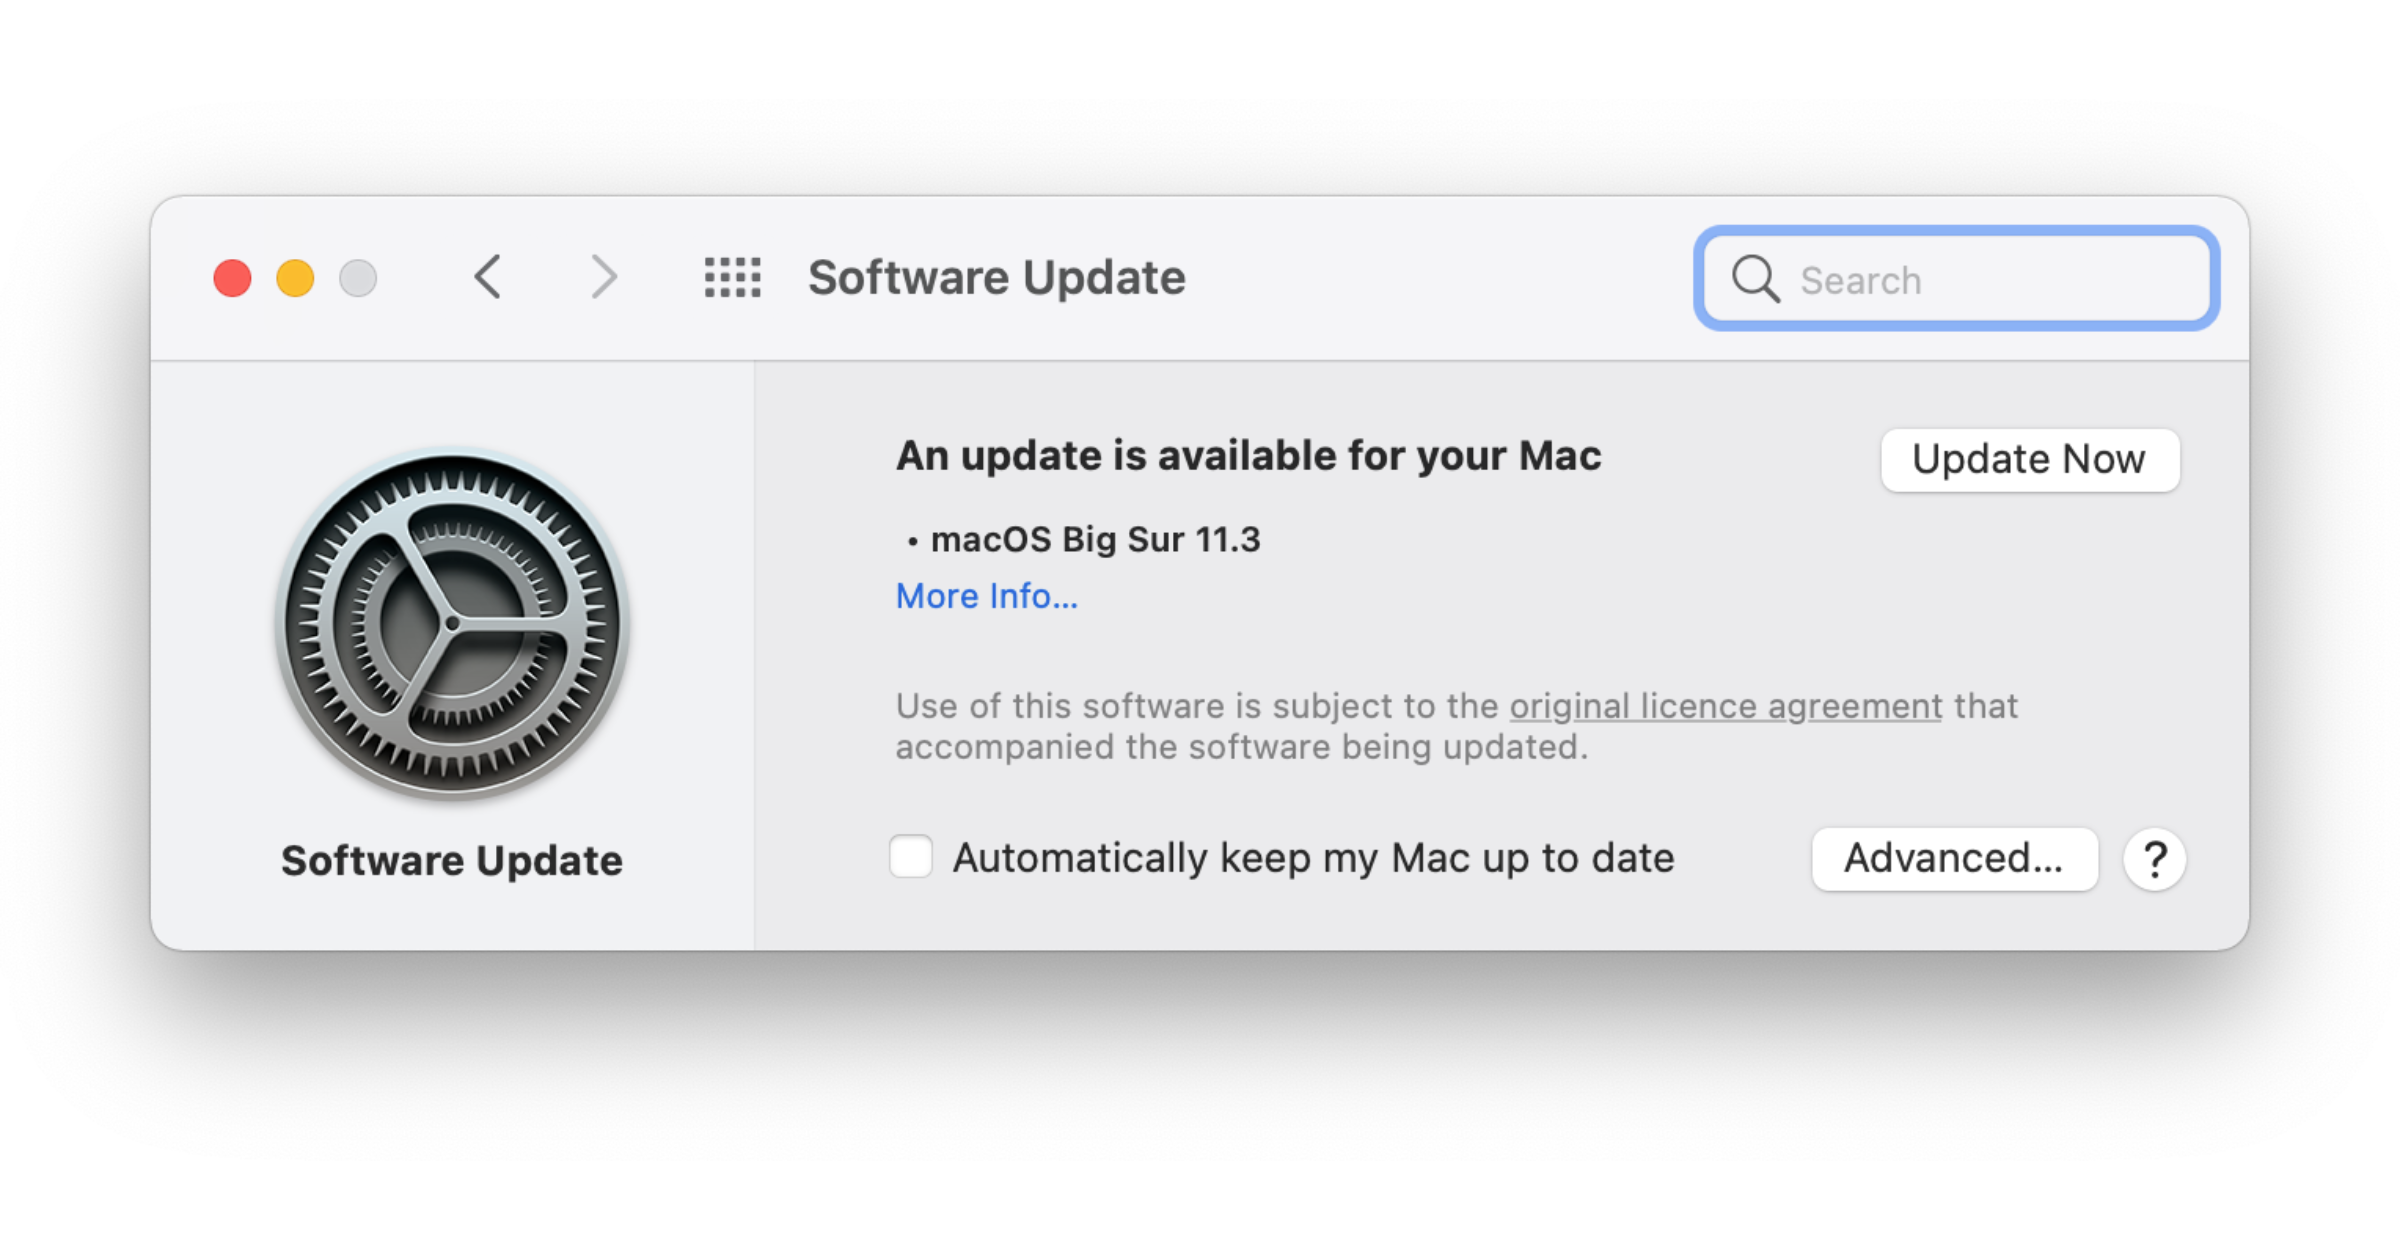 Mac OS Big Sur 11.3